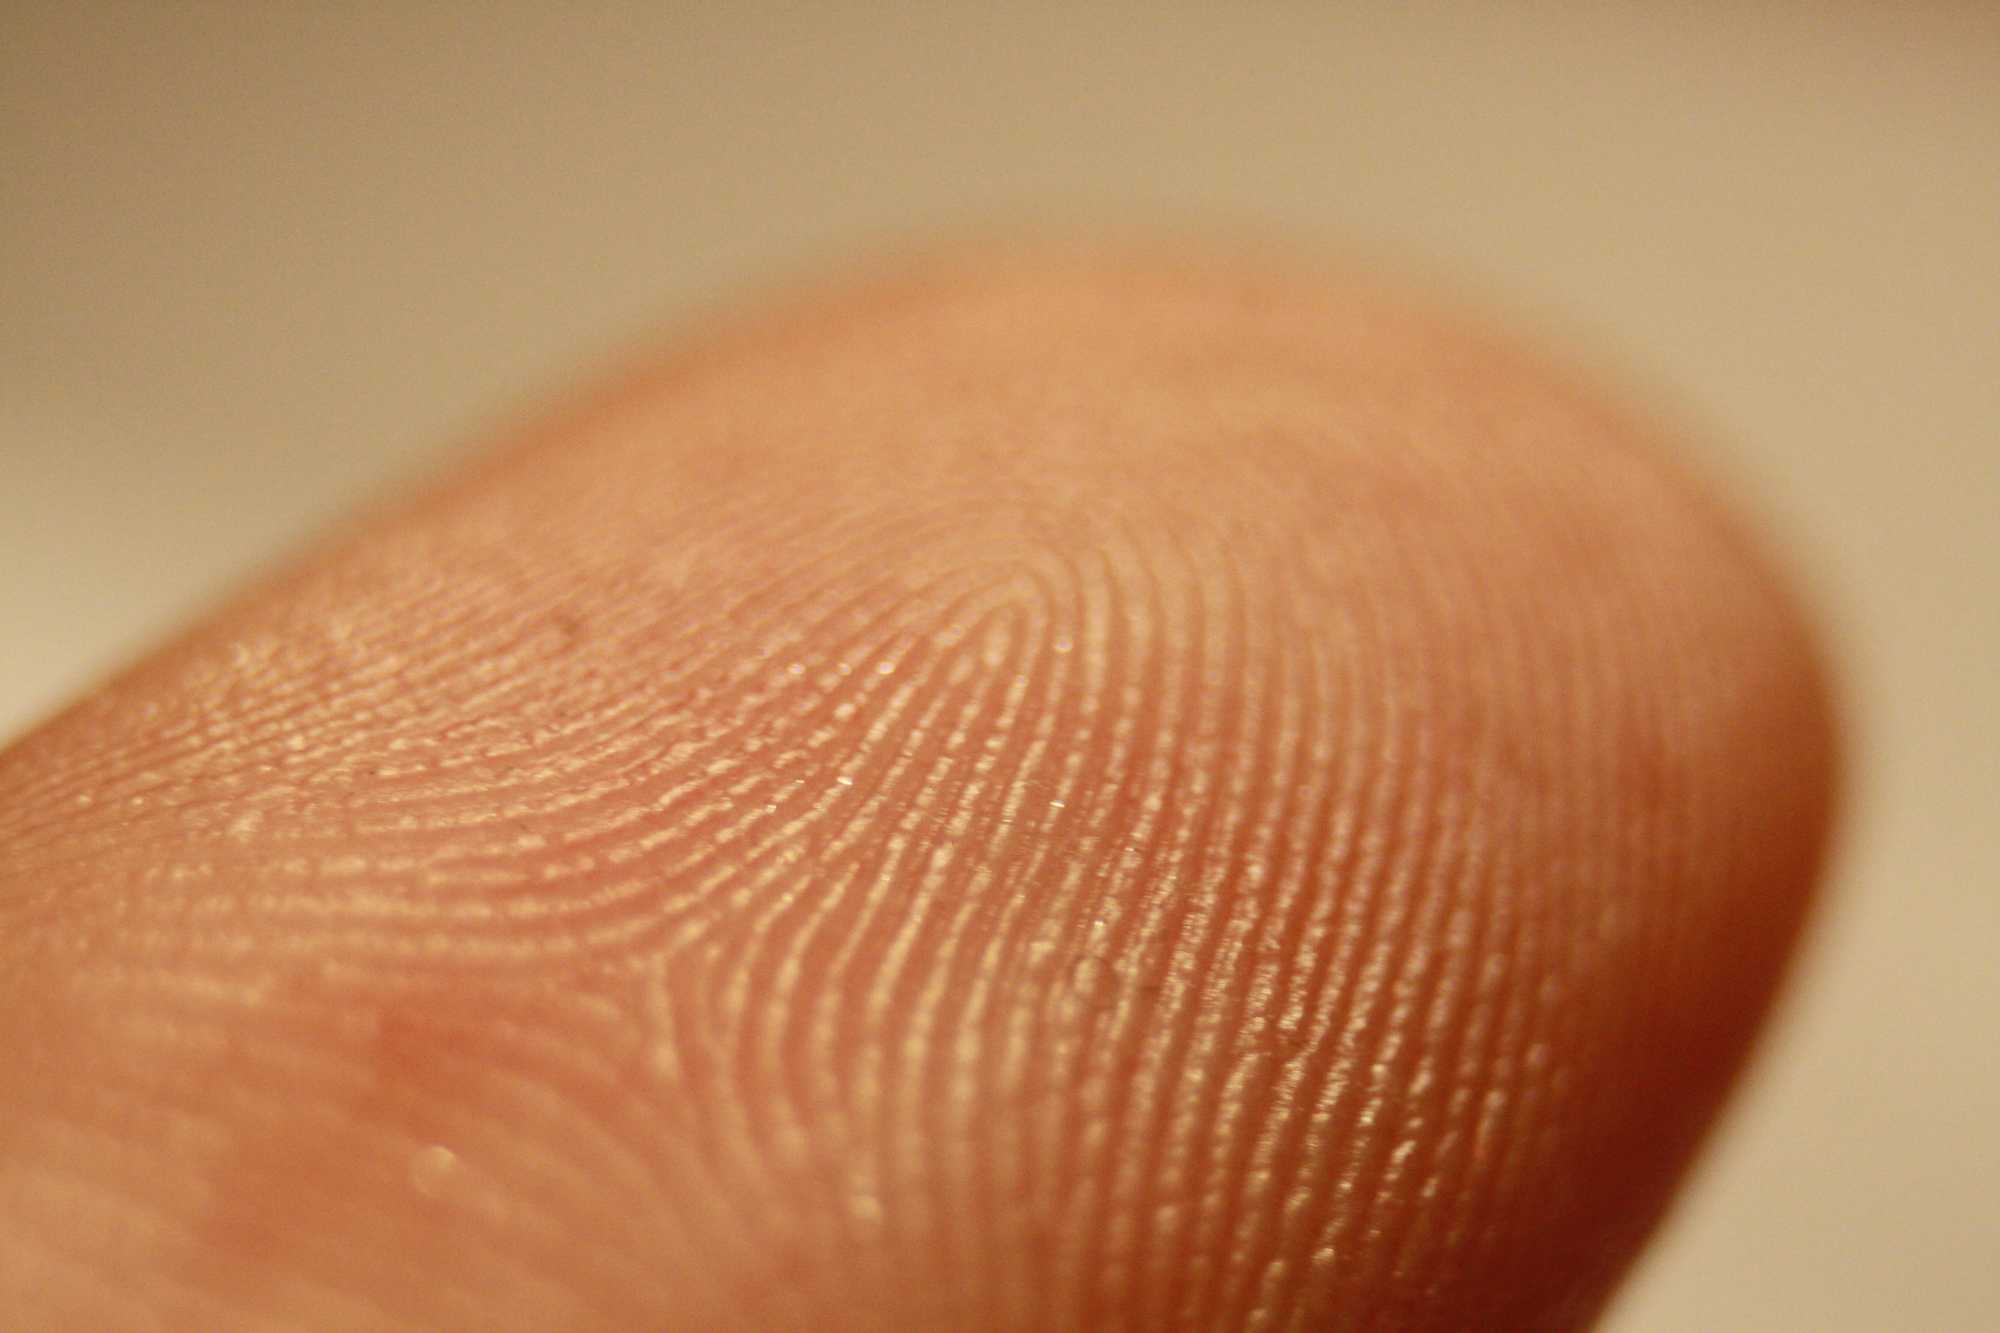 Forscher entsperren Smartphone über Fingerprint-Sensor